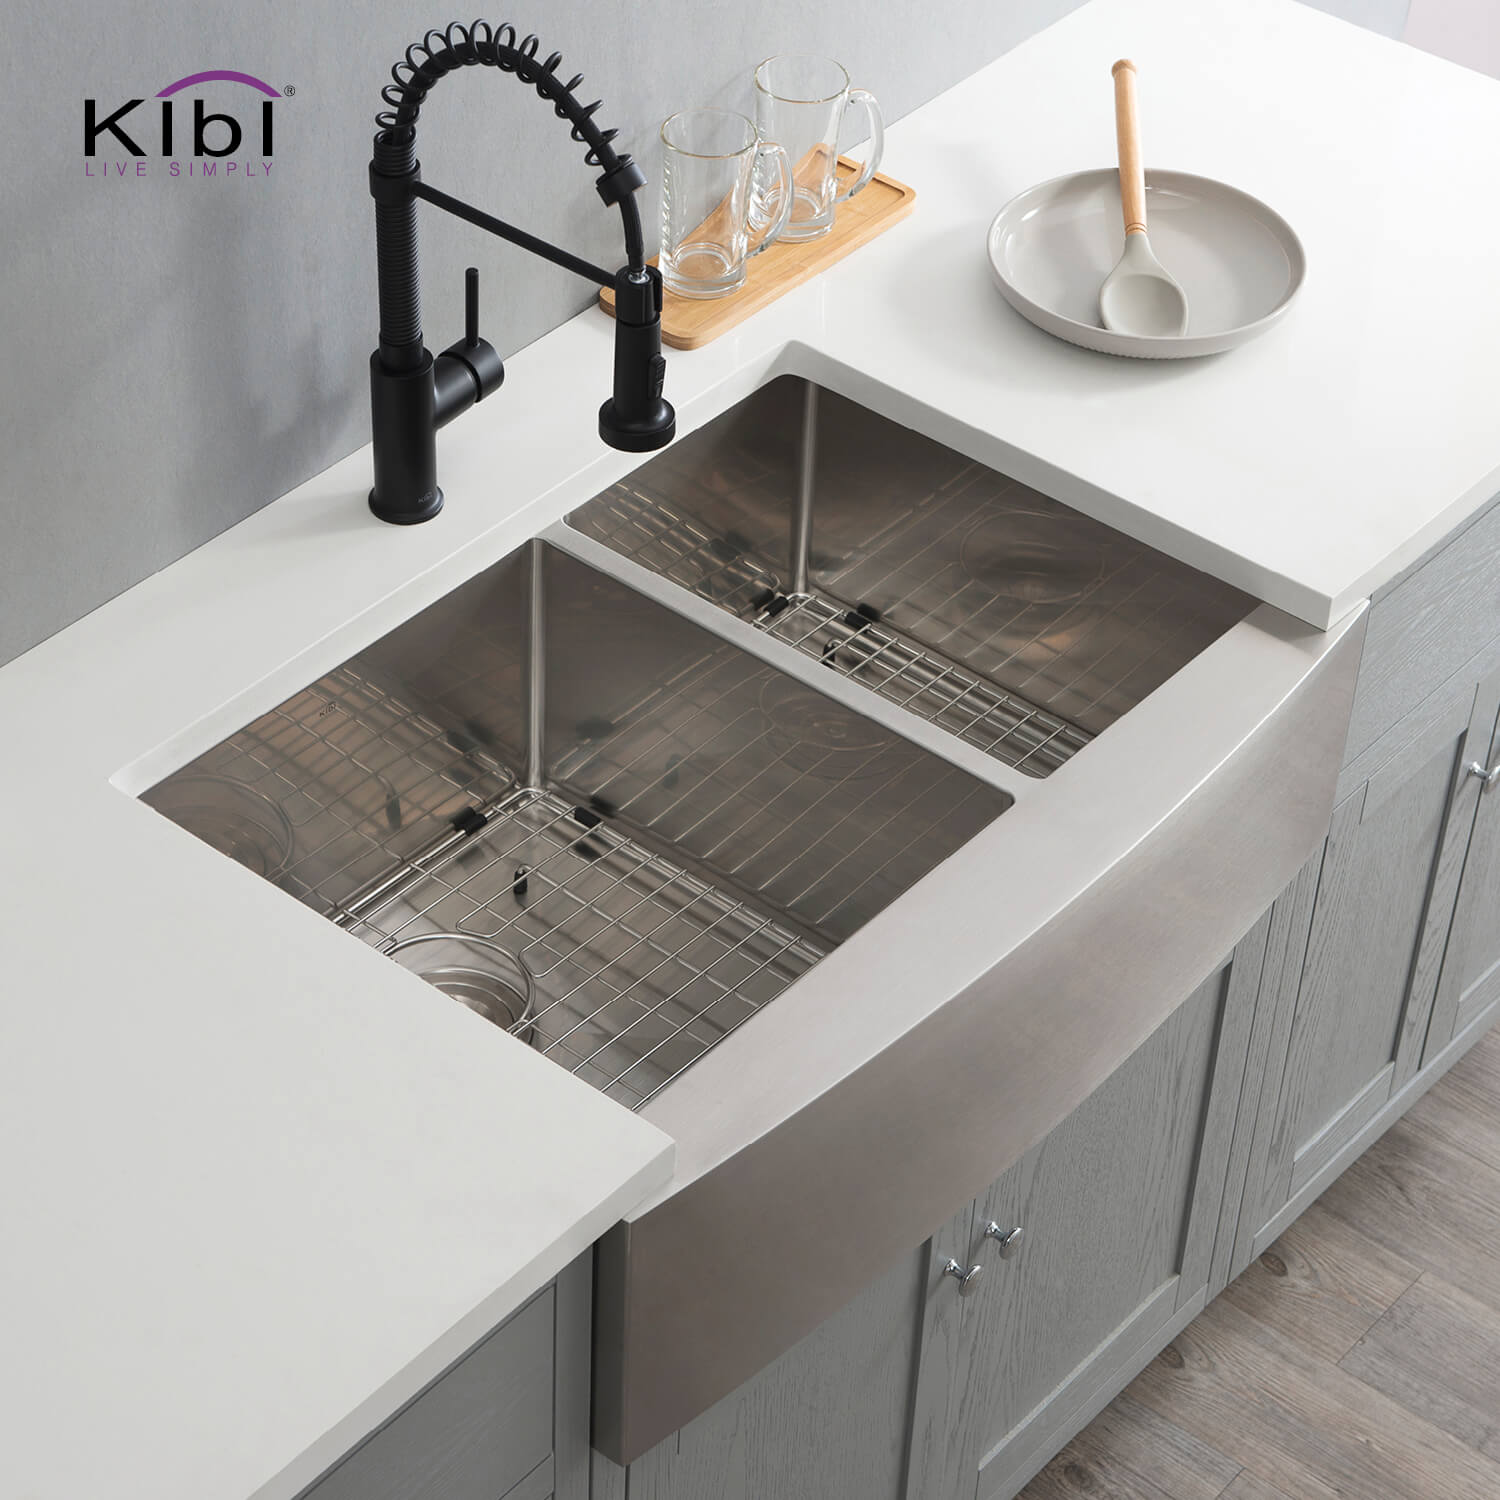 Kibi 33" x 22" x 10" Handcrafted Double Bowl Farmhouse Apron Kitchen Sink With Satin Finish